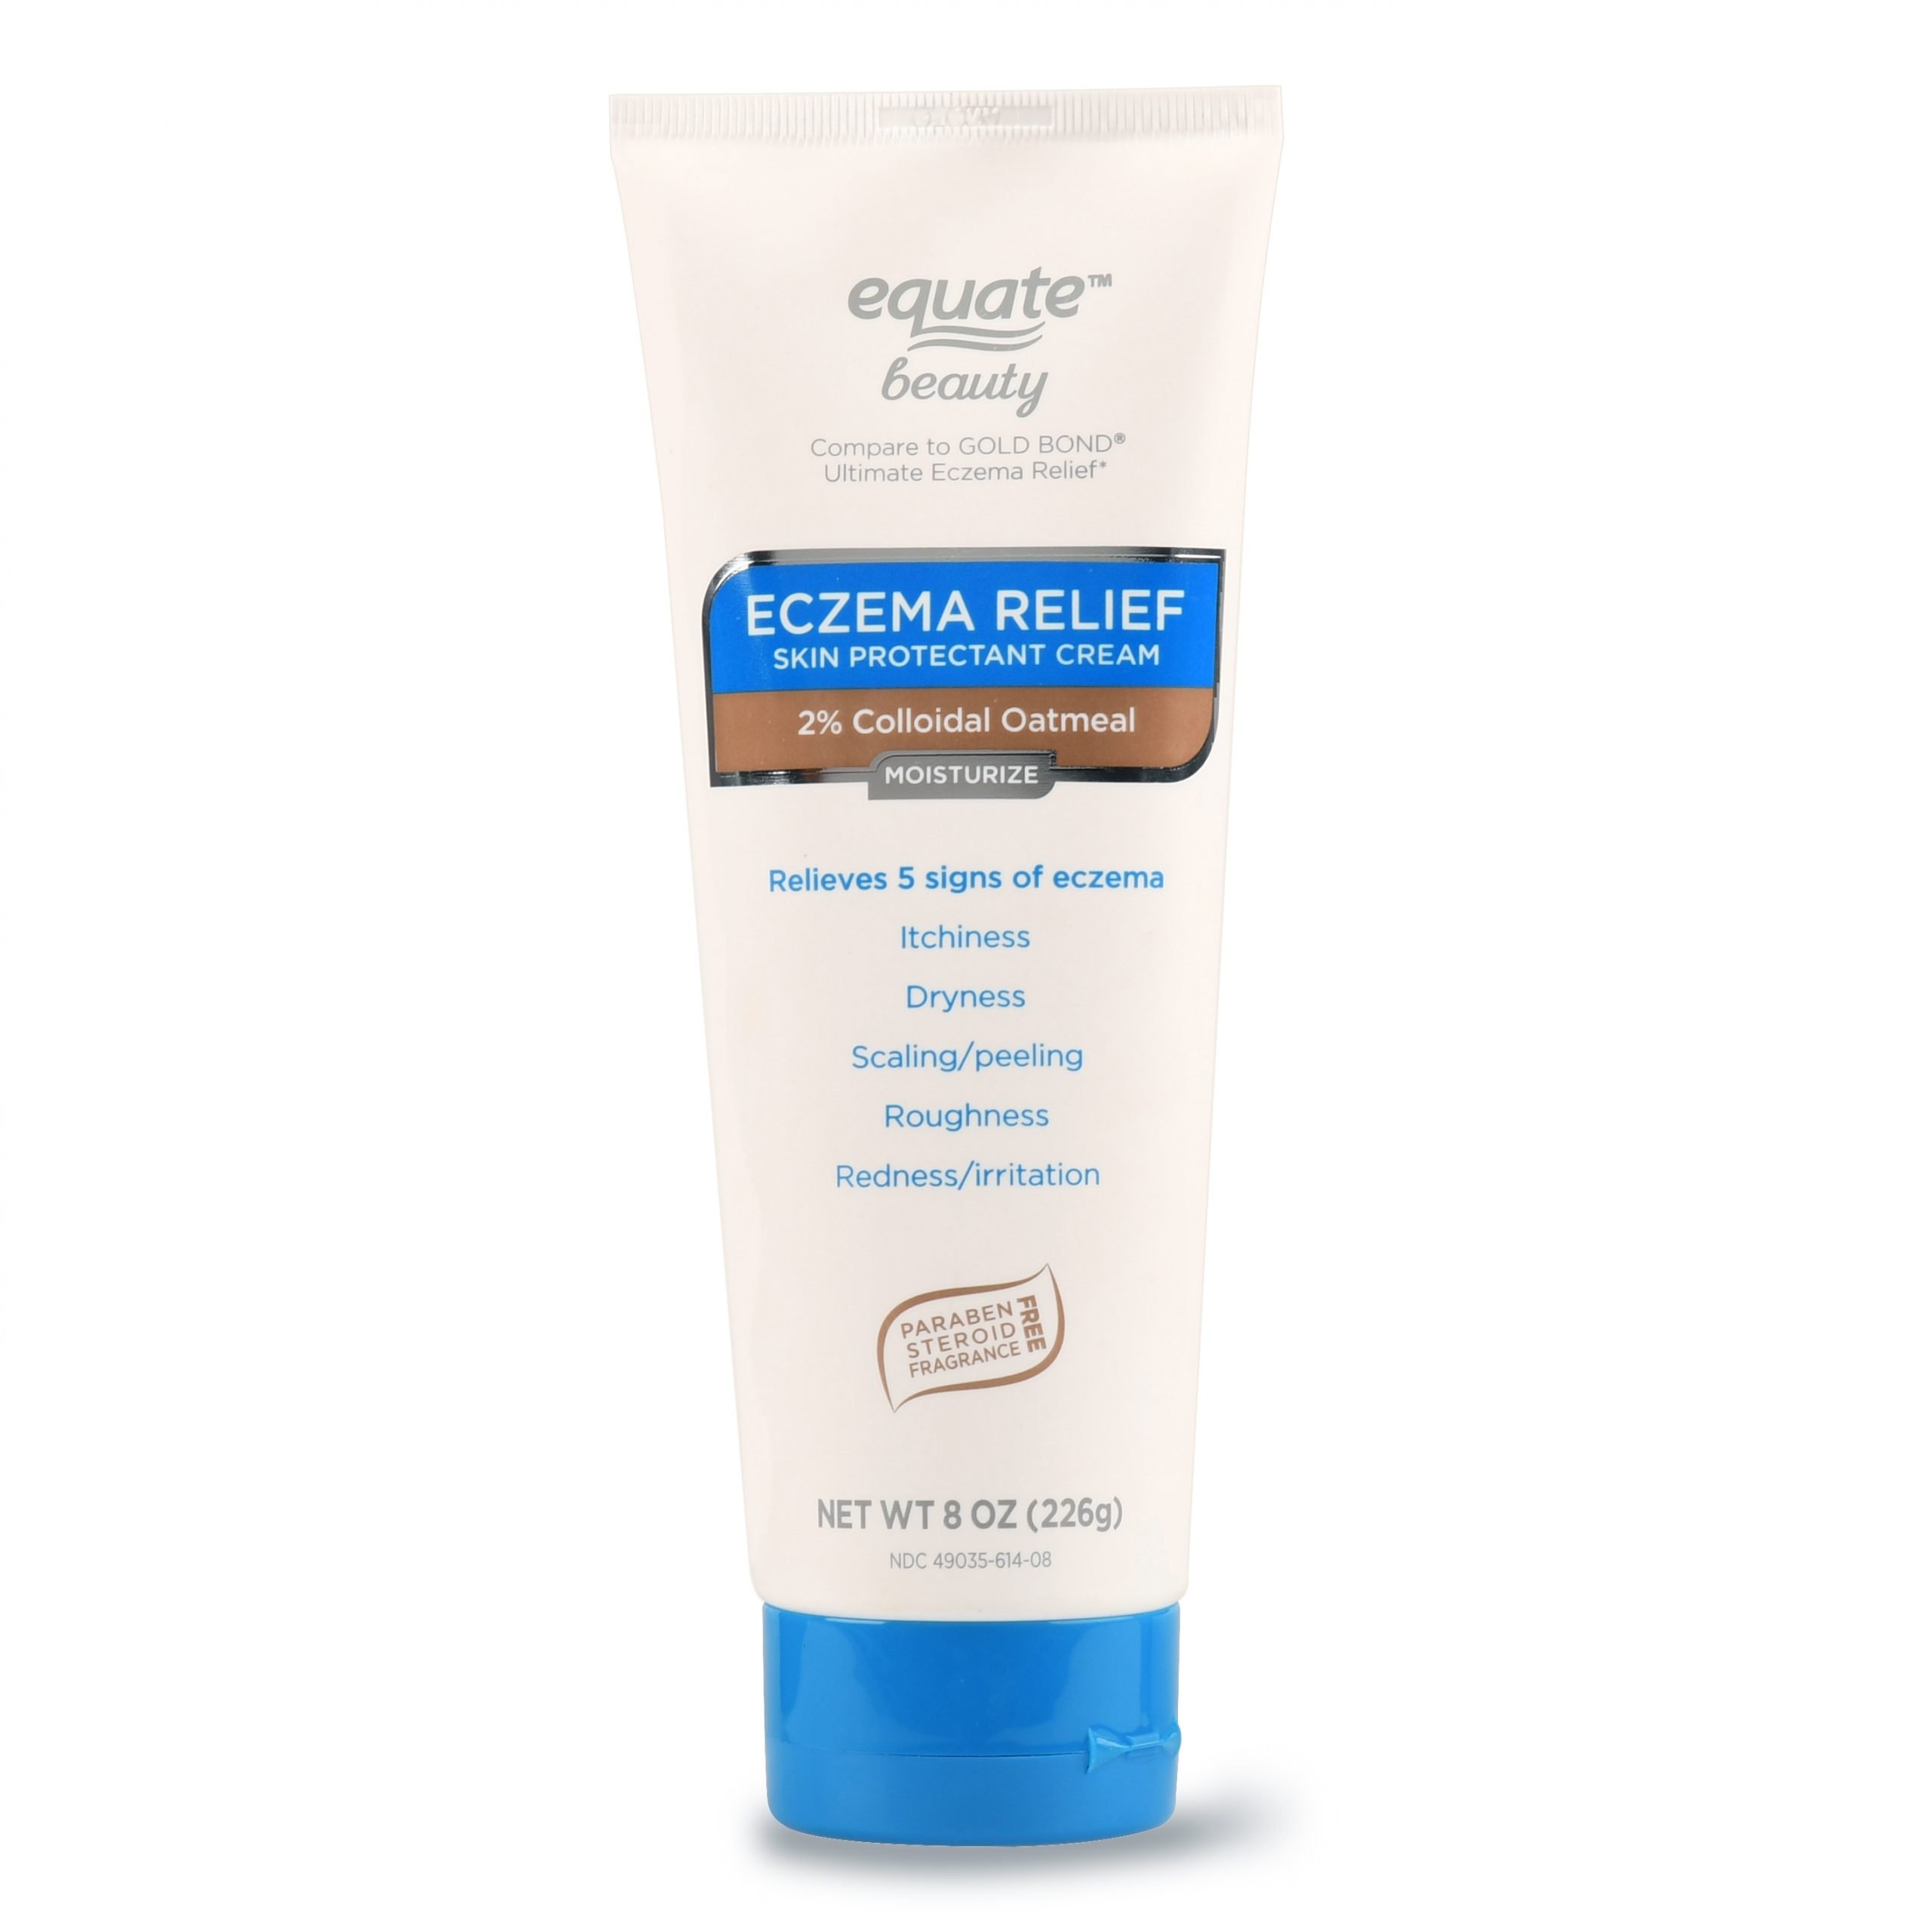 Equate Beauty Eczema Relief Skin Protectant Cream, 8 oz